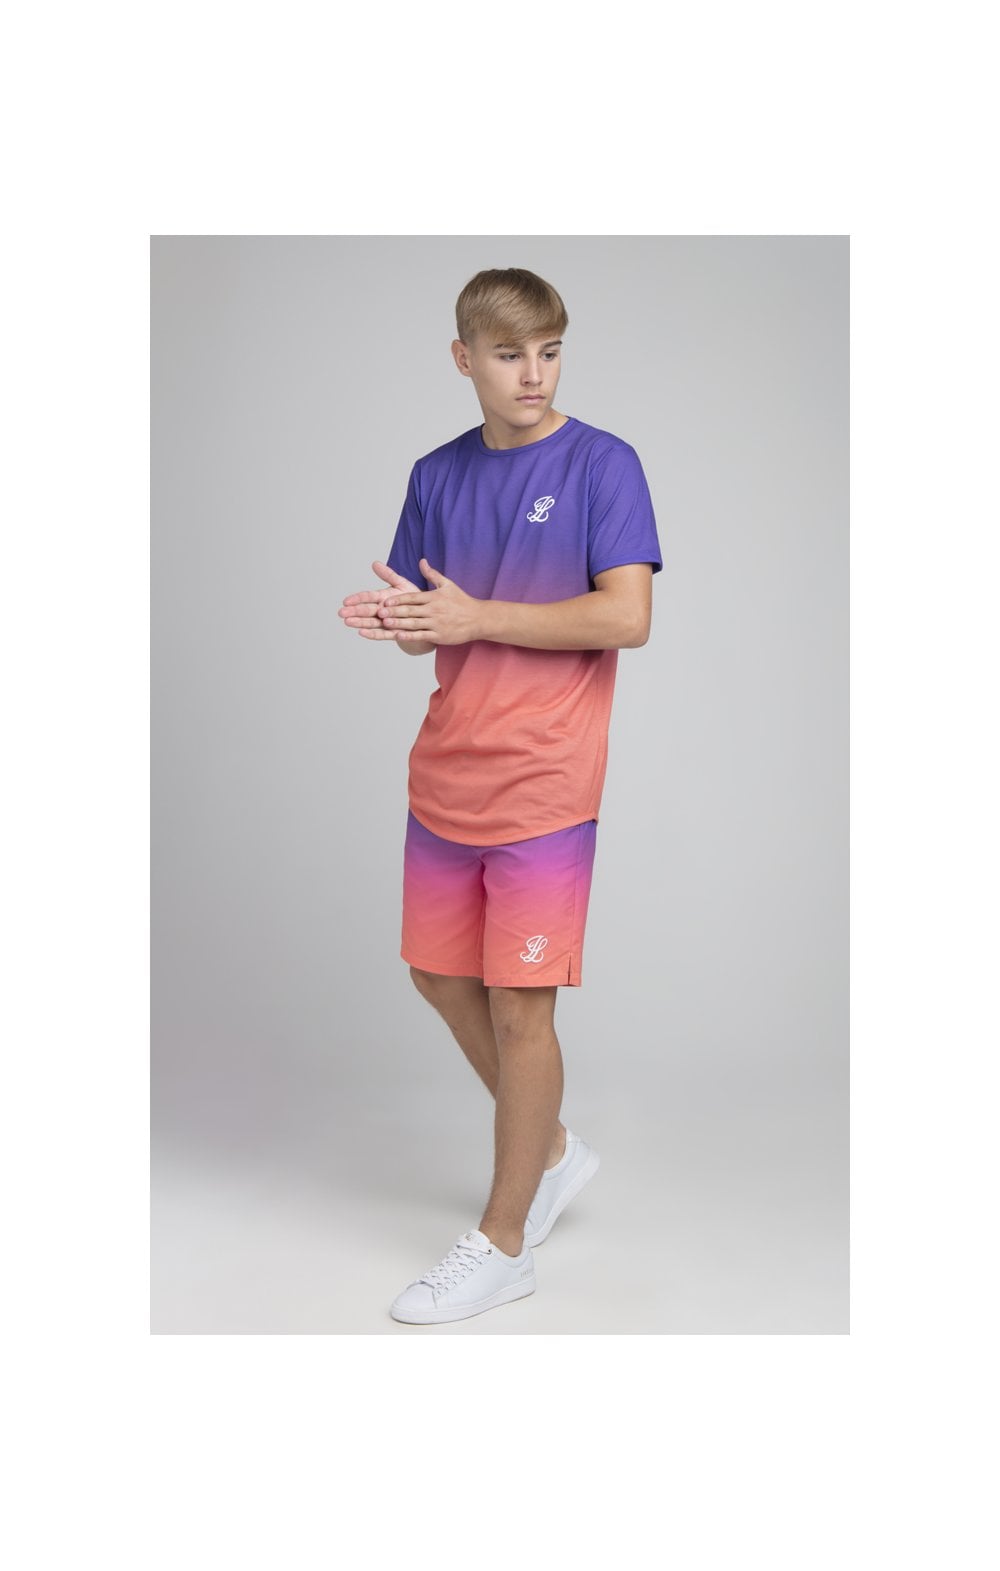 Boys Illusive Purple Fade T-Shirt (4)